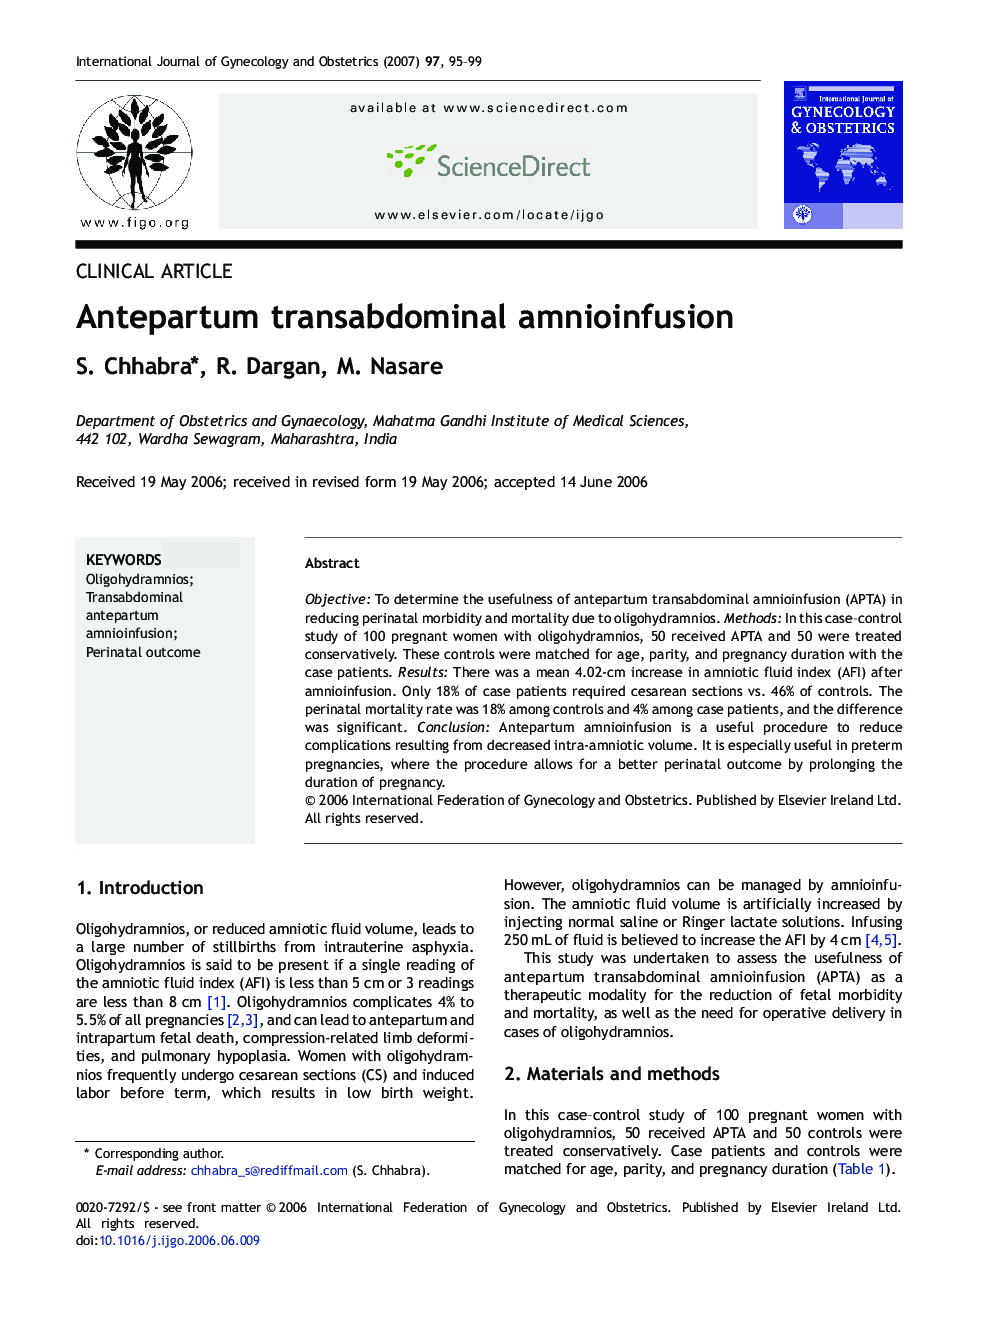 Antepartum transabdominal amnioinfusion